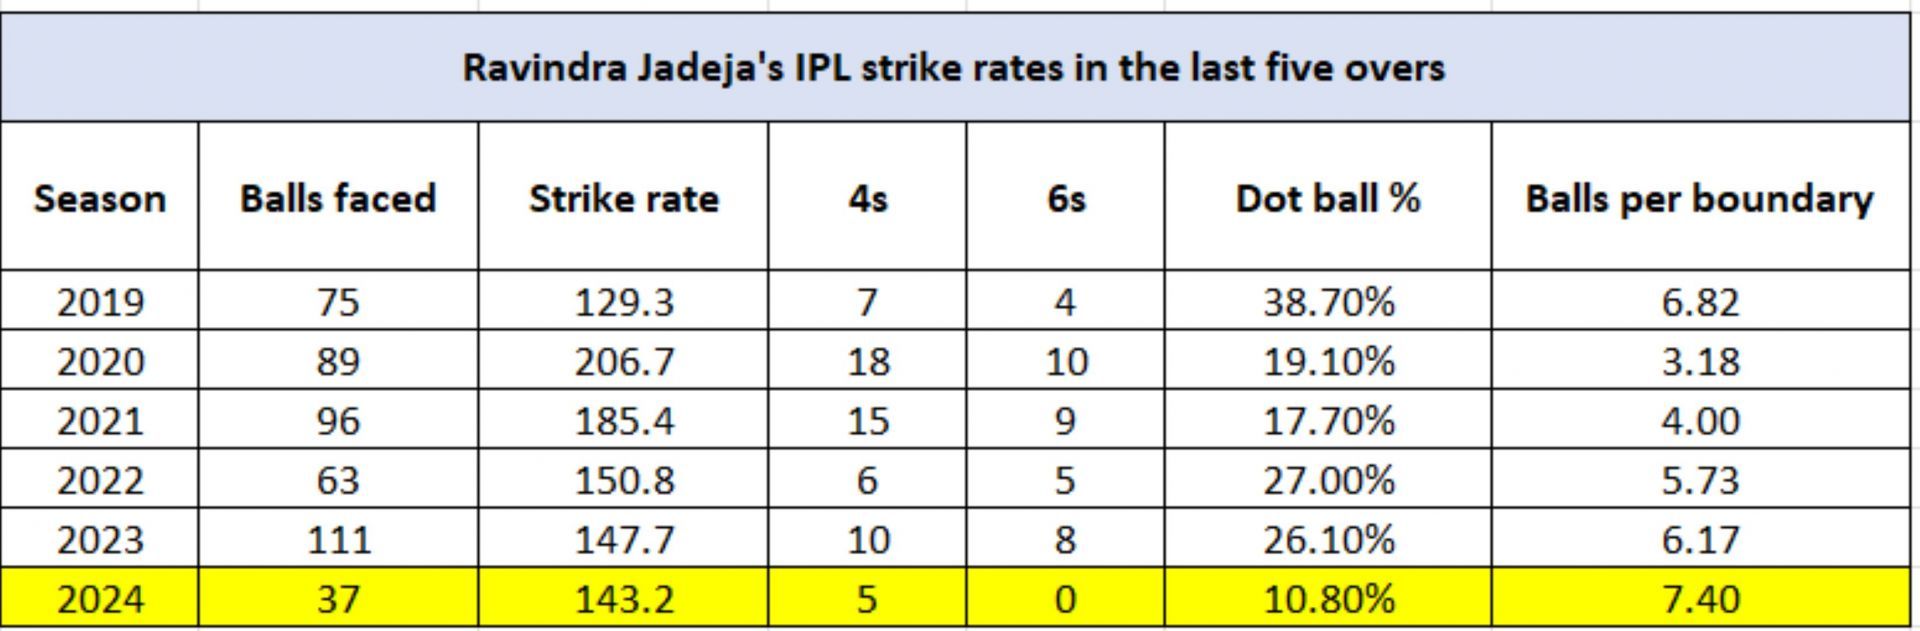 Jadeja&#039;s boundary-hitting ability has dipped massively this season. (Credit: Cricinfo Cricmetric)